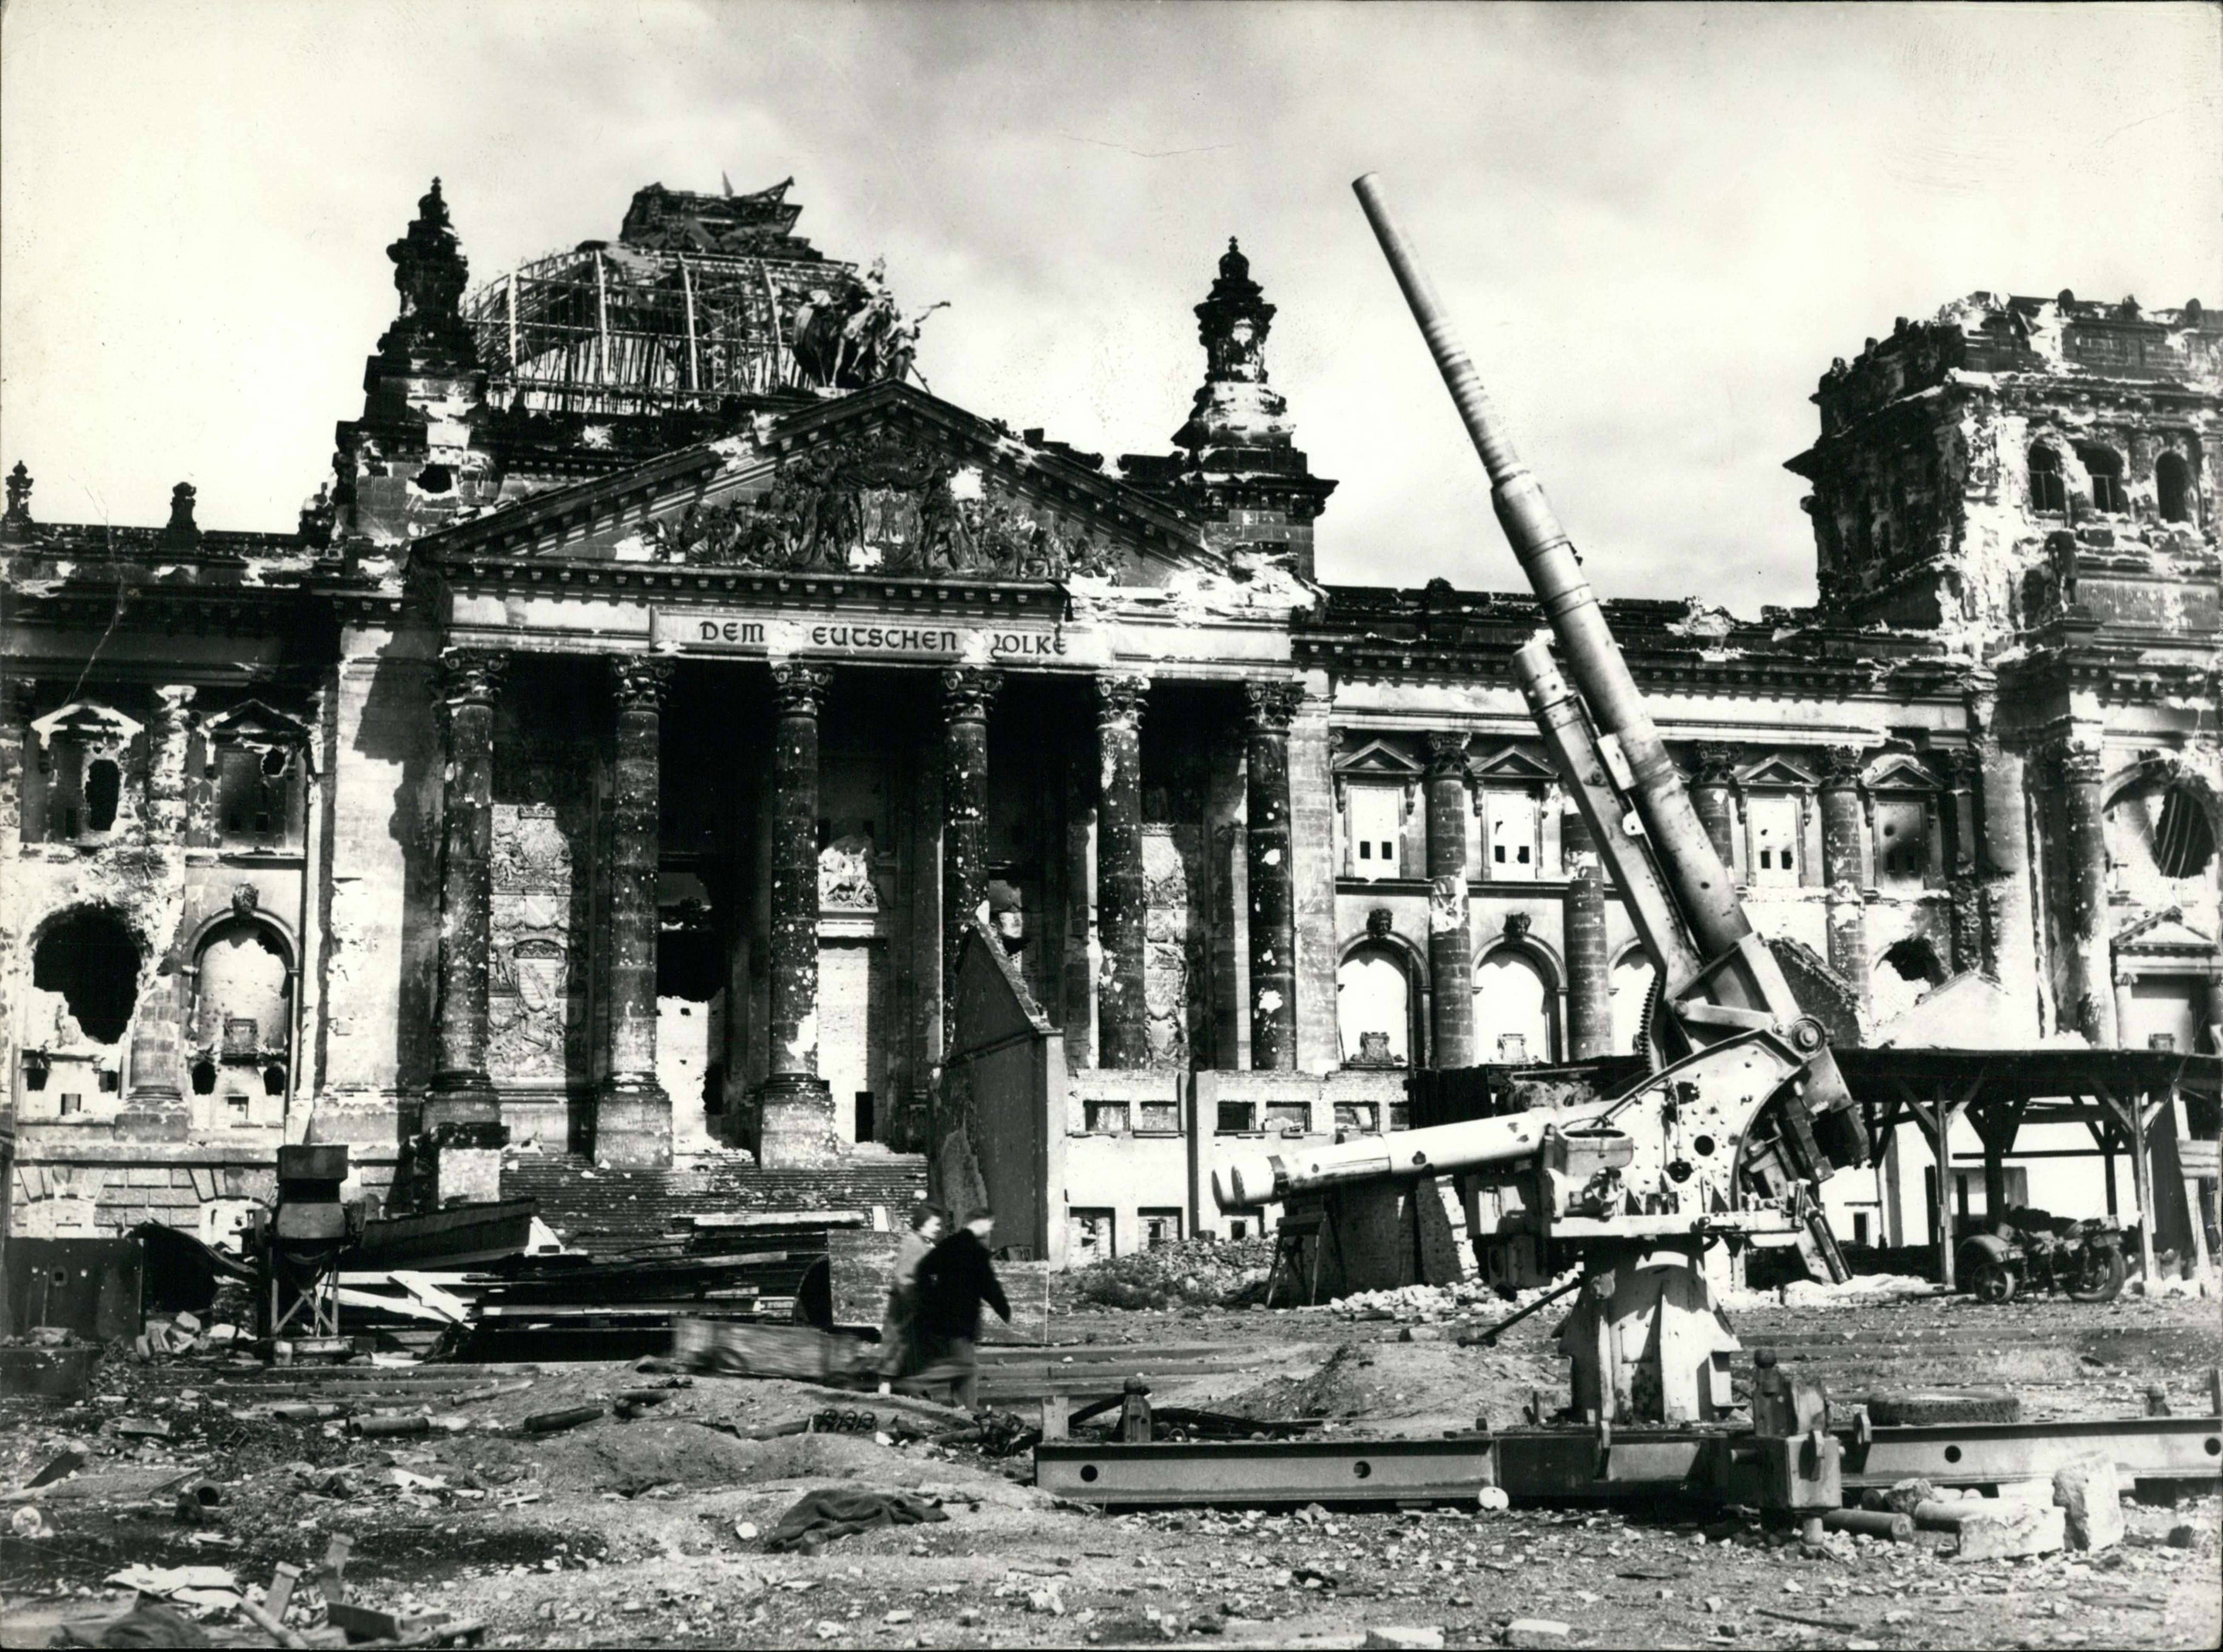 Apr. 24, 1985 - 40th Anniversary Finish WWII Reichstag Berlin 1945 PUBLICATIONxINxGERxONLY - ZUMAk09

Apr 24 1985 40th Anniversary Finish WWII Reichstag Berlin 1945 PUBLICATIONxINxGERxONLY ZUMAk09